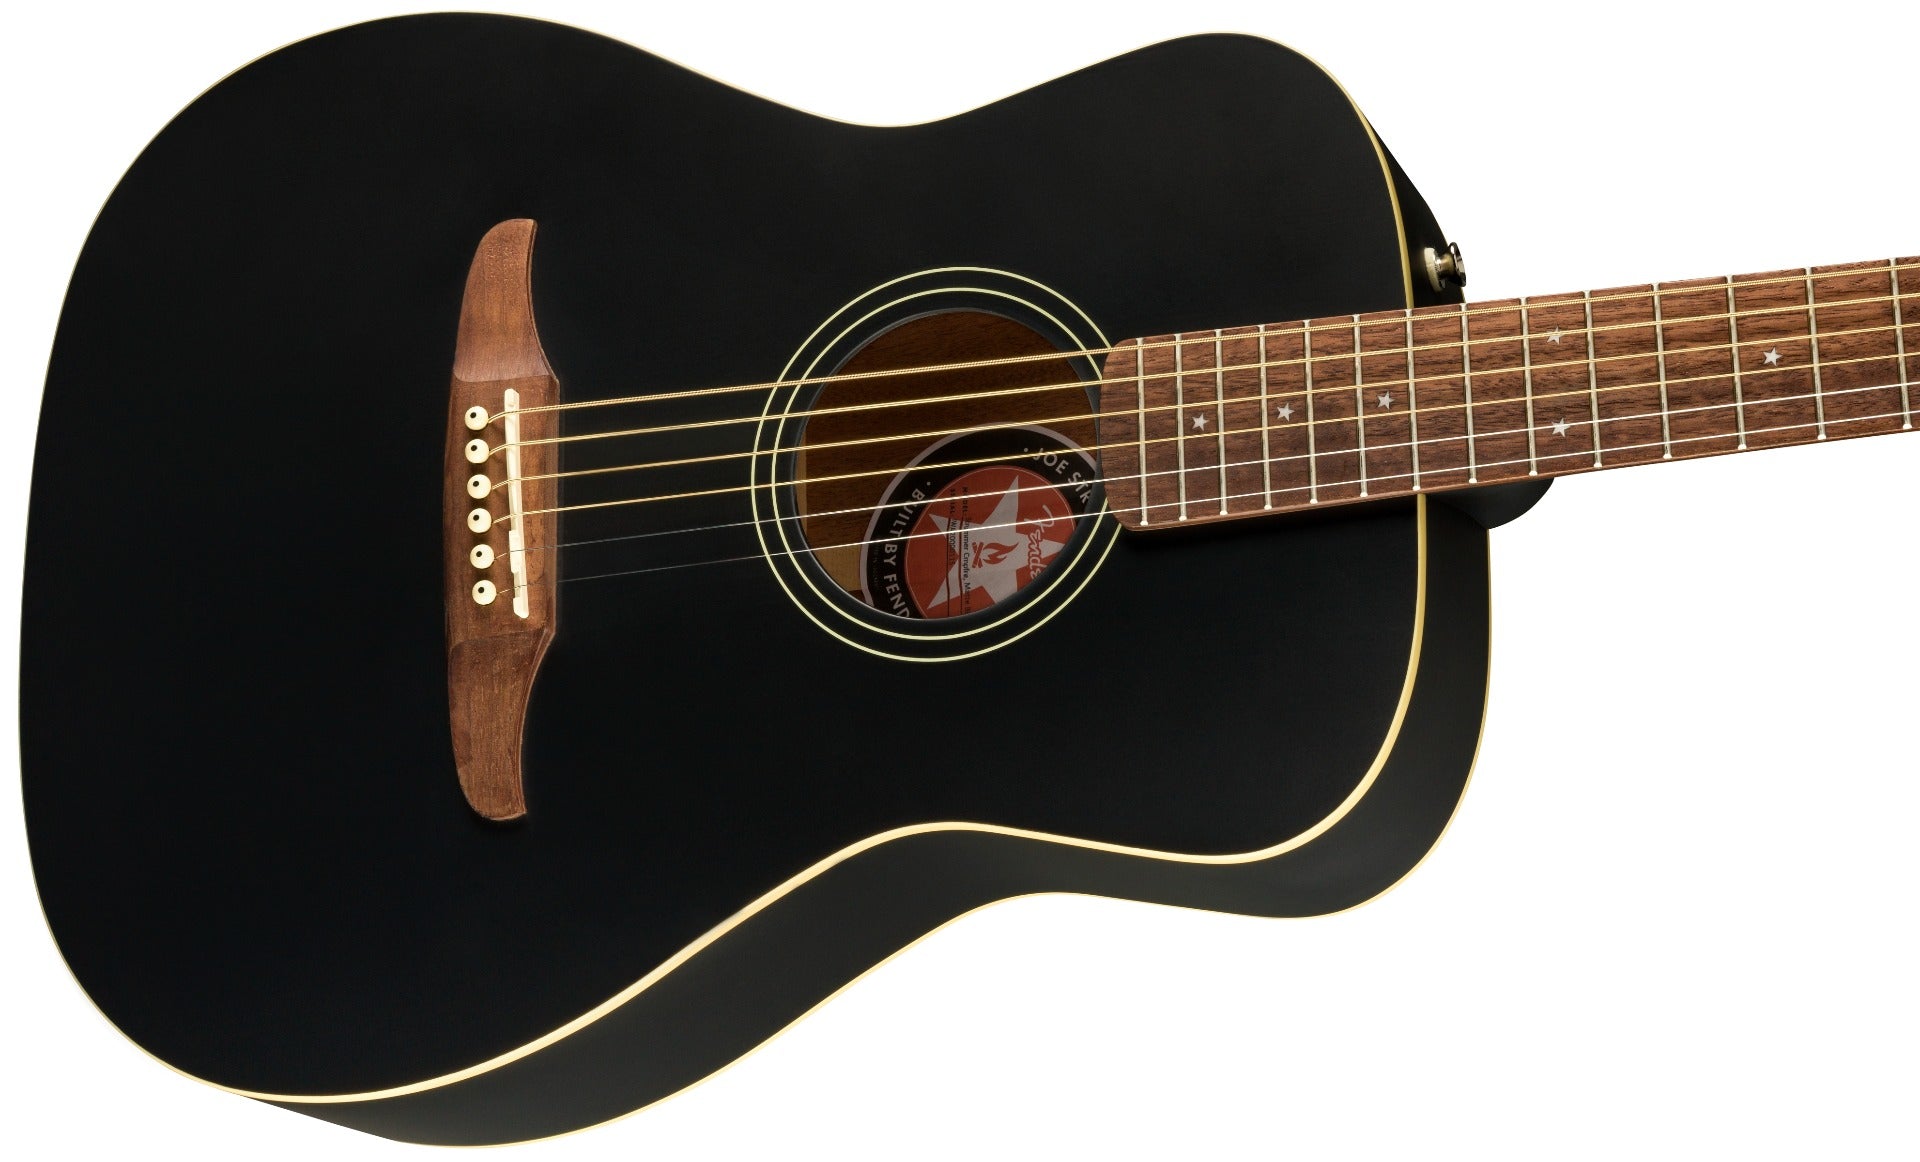 Body detail image of Fender Joe Strummer Campfire Acoustic Guitar